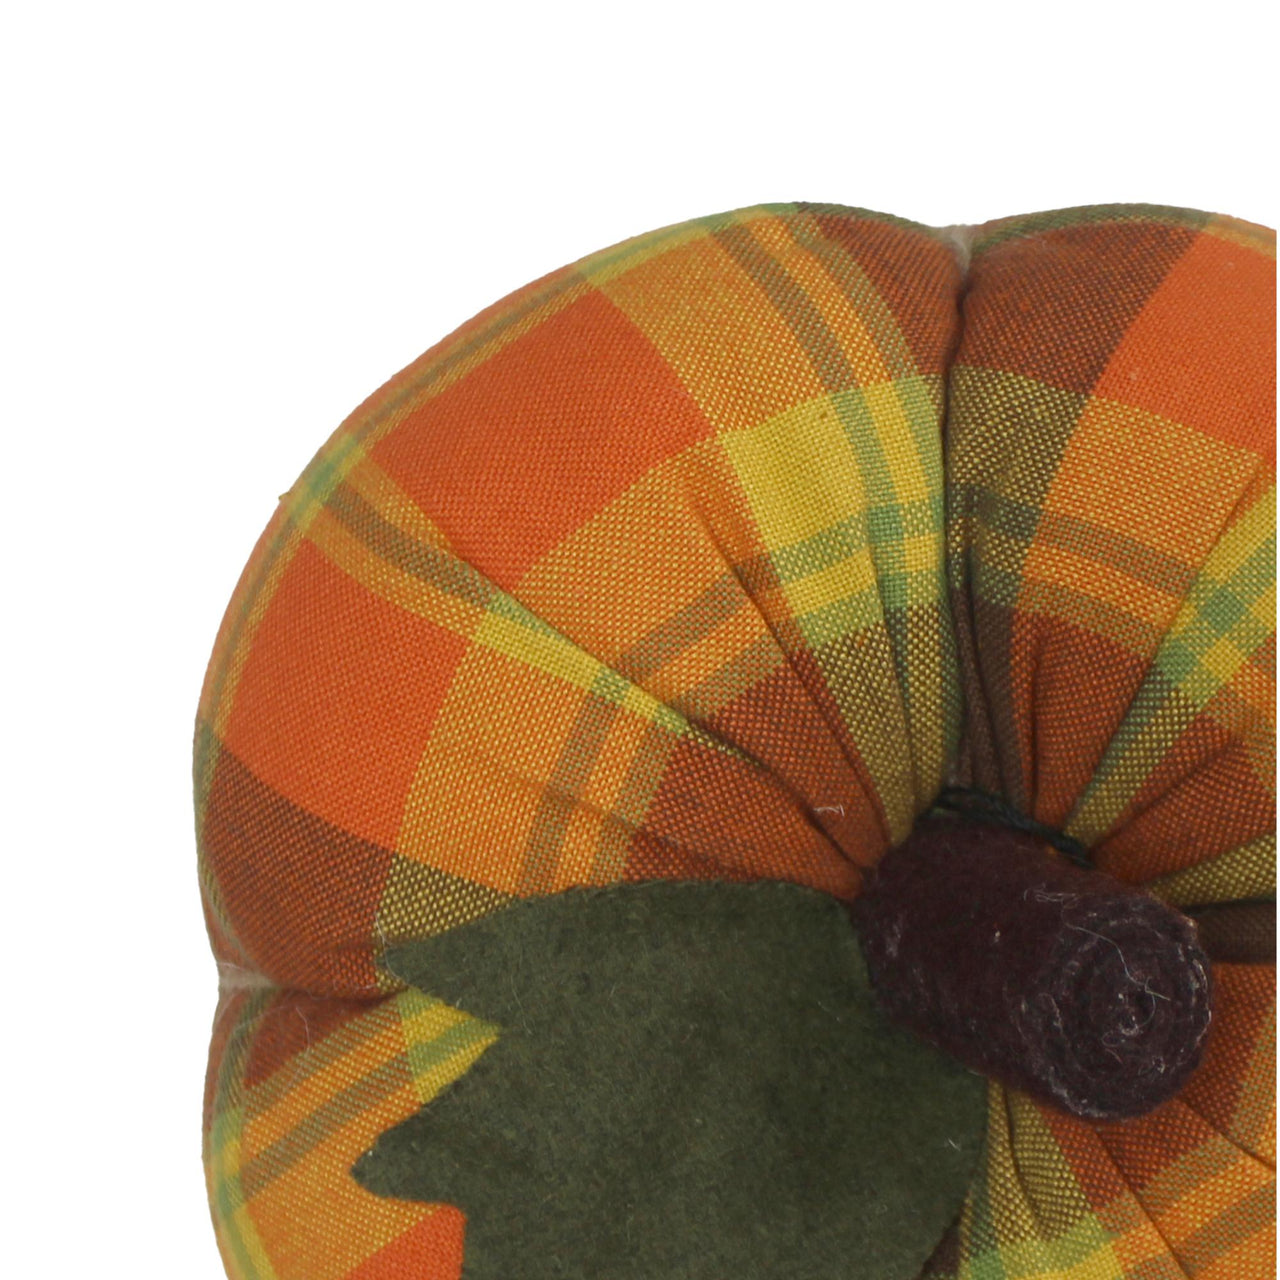 F Autumn Plaid Pumpkin 8 Inx6 In ON336023